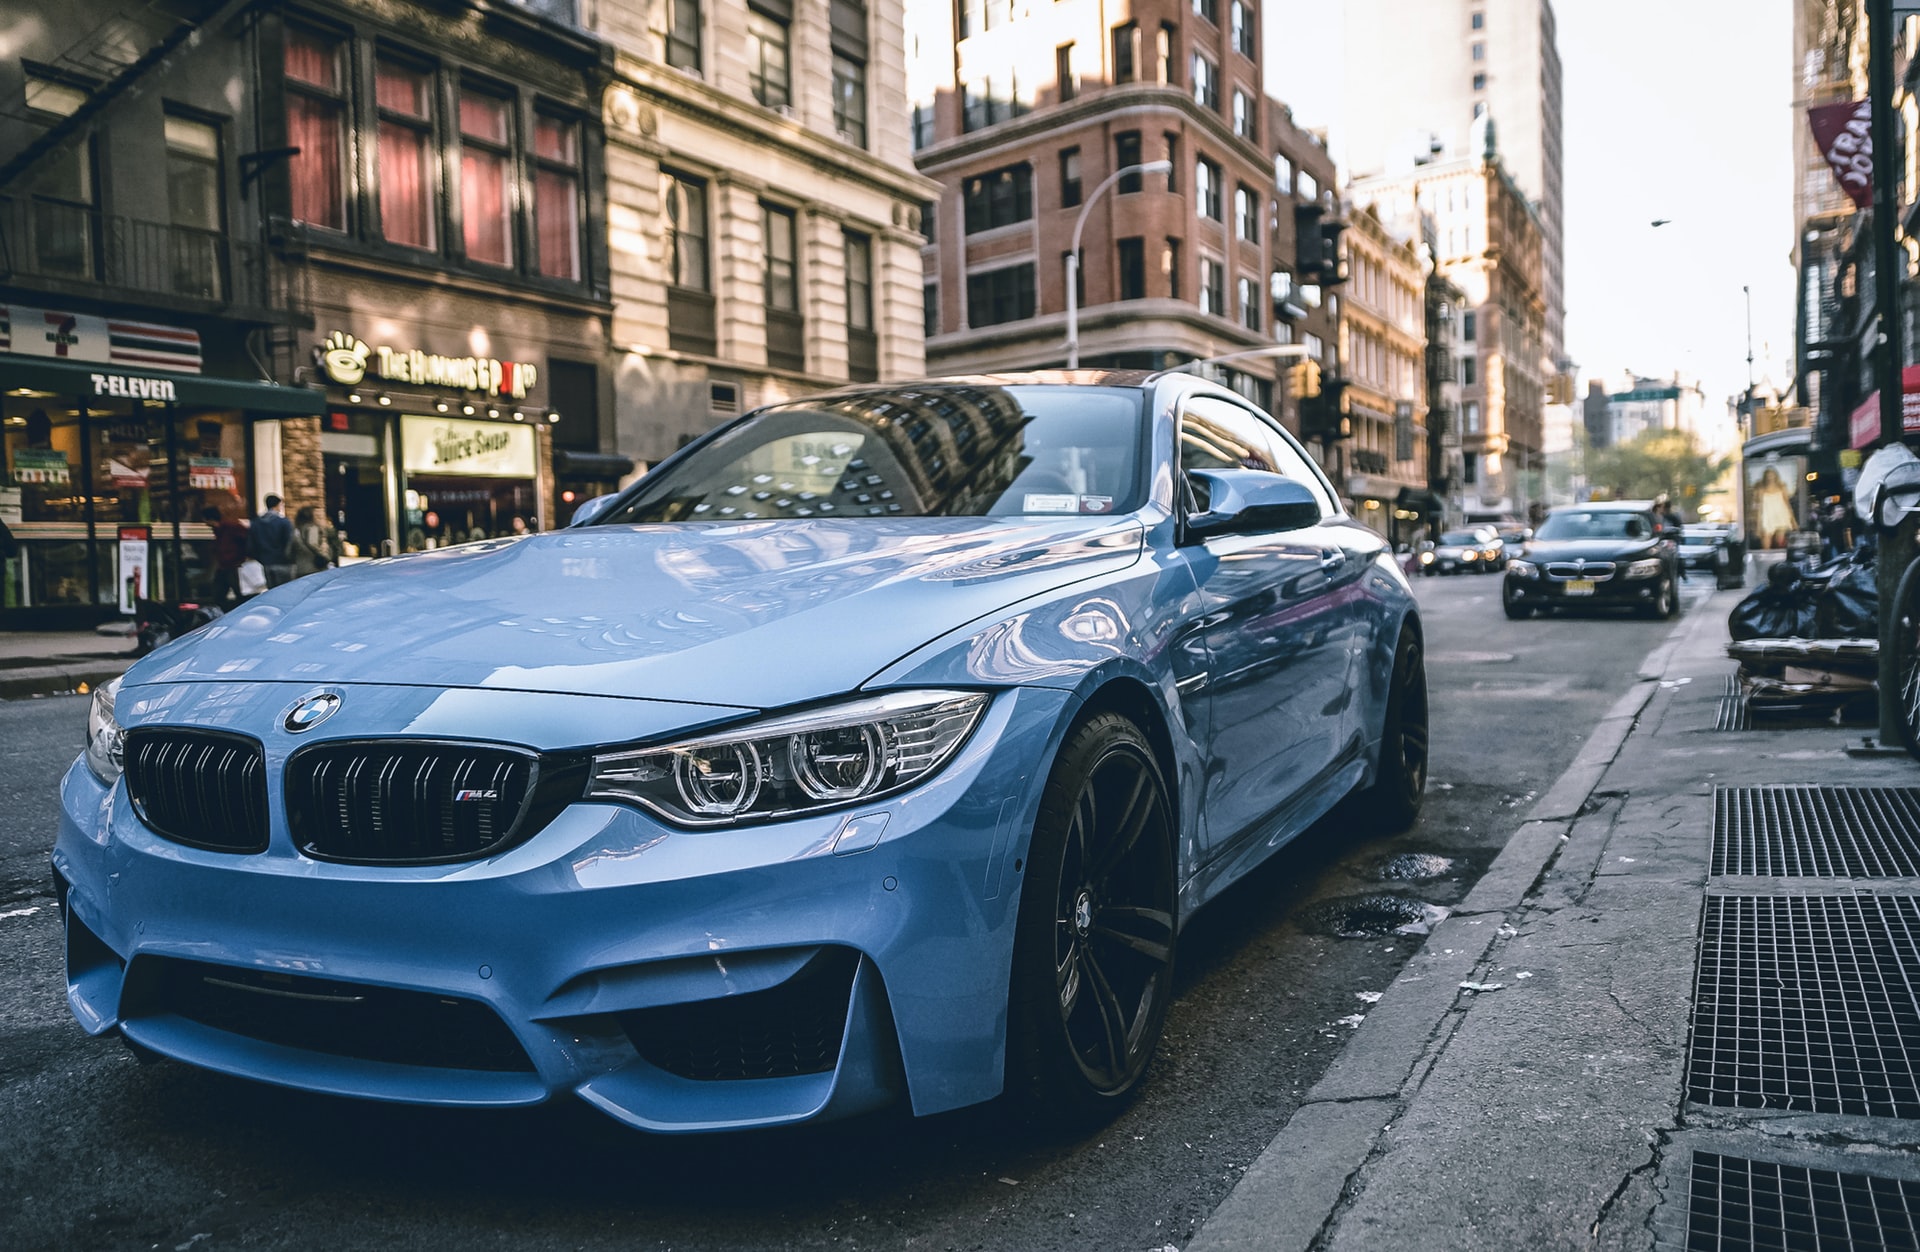 BMW မှ i7 လို့အမည်ပေးထားတဲ့ luxury sedan လျှပ်စစ်ကားအသစ်ကို ထုတ်လုပ်သွားမည်ဖြစ်ကြောင်း ကြေငြာ